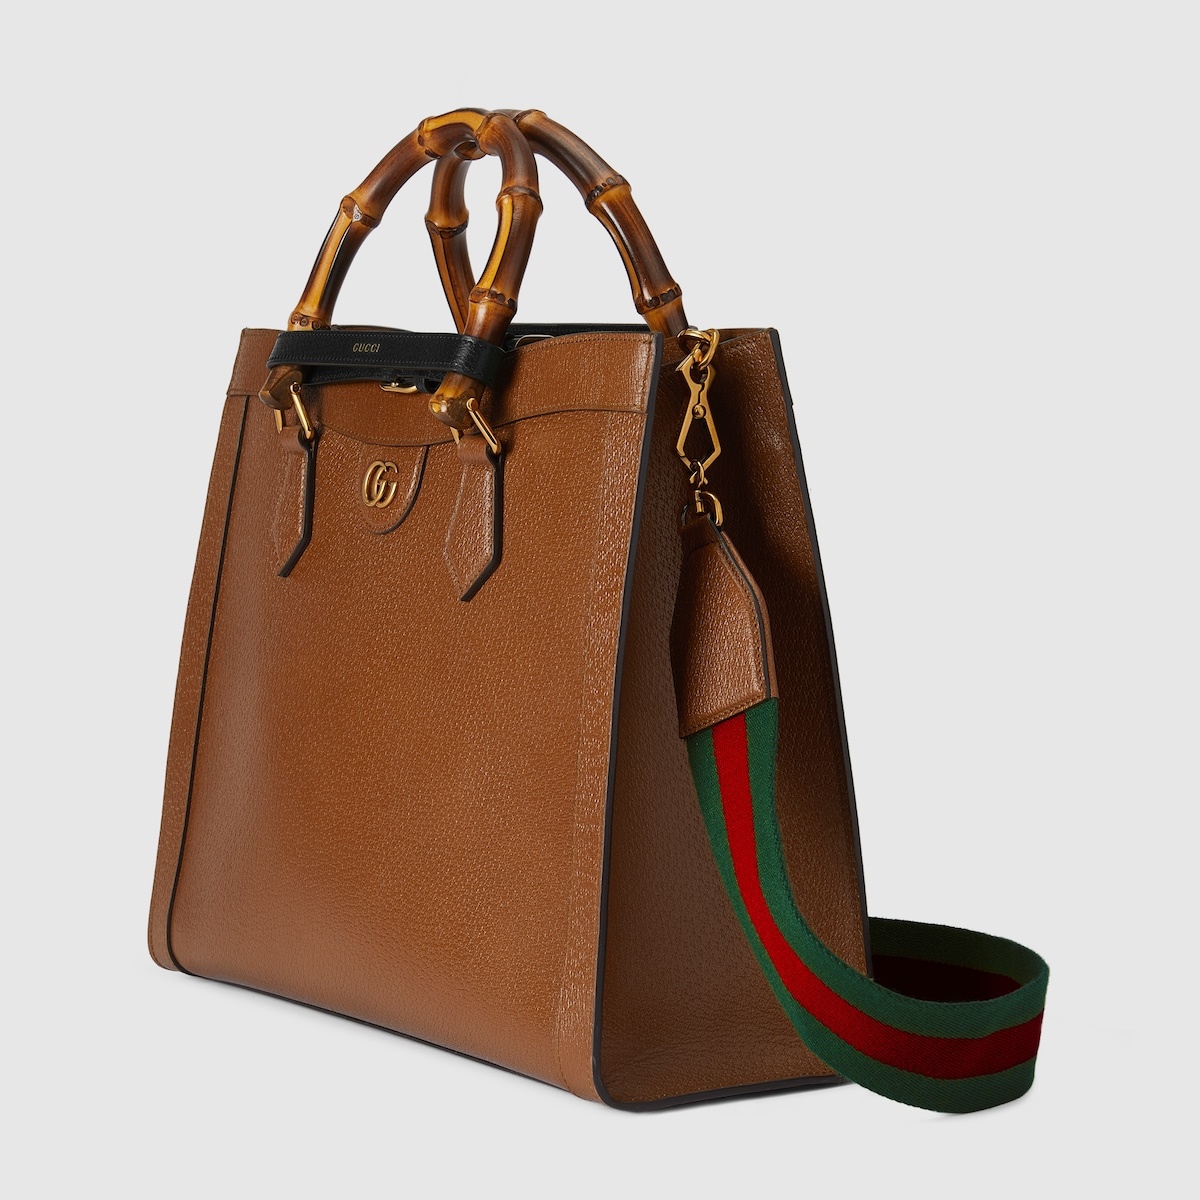 Gucci Diana medium tote bag - 2